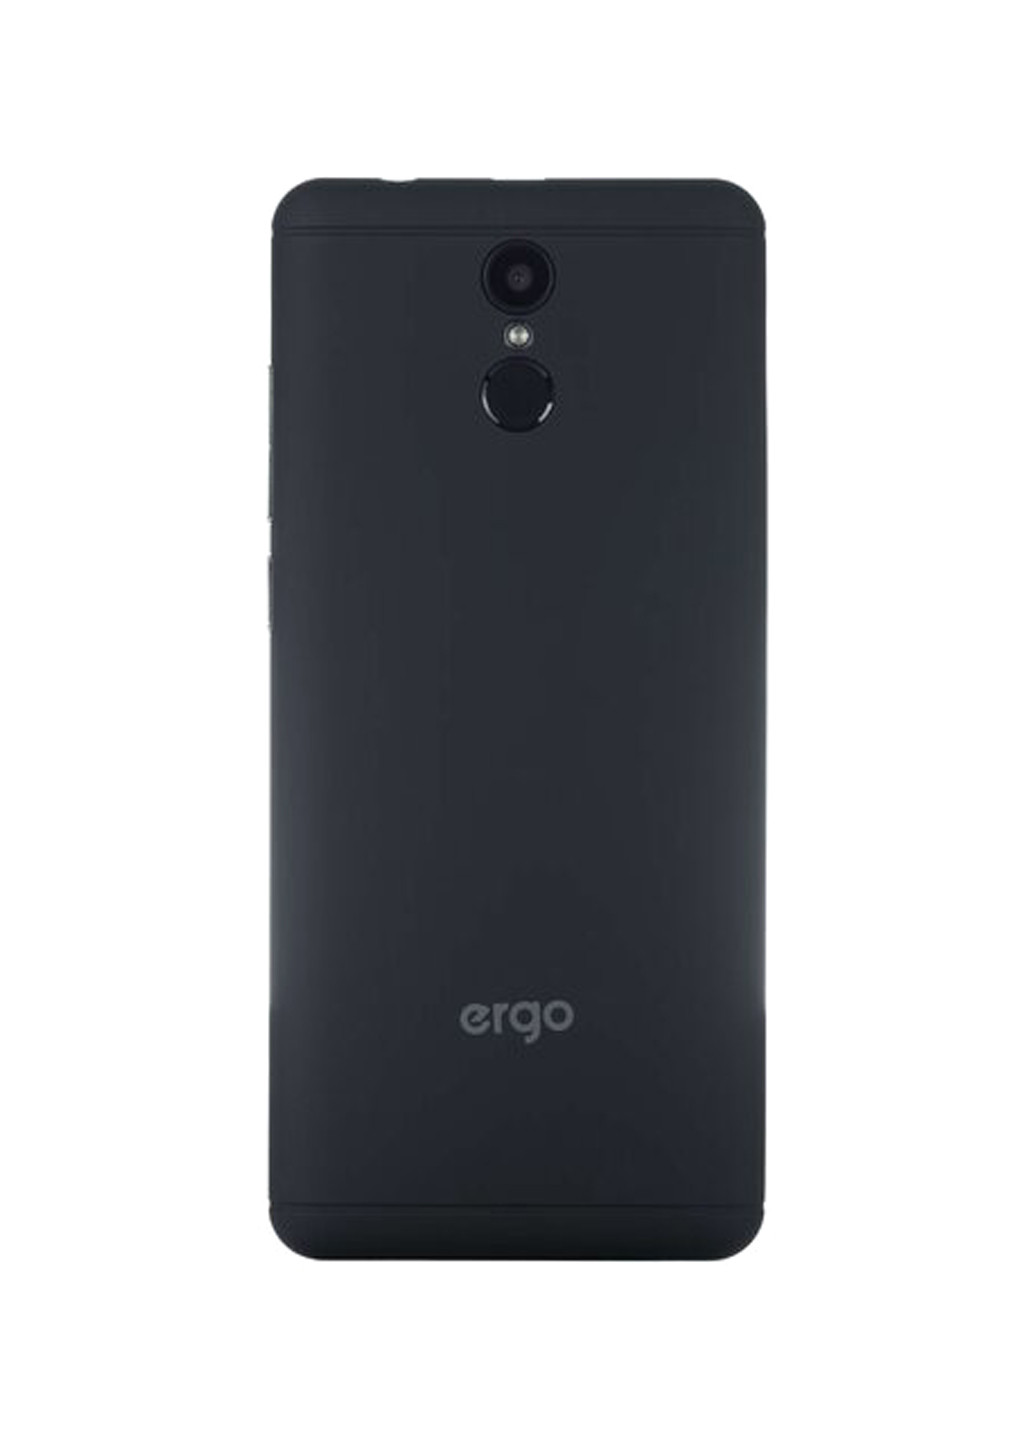 Смартфон V550 Vision 2 / 16GB Black Ergo v550 vision 2/16gb black (133442601)